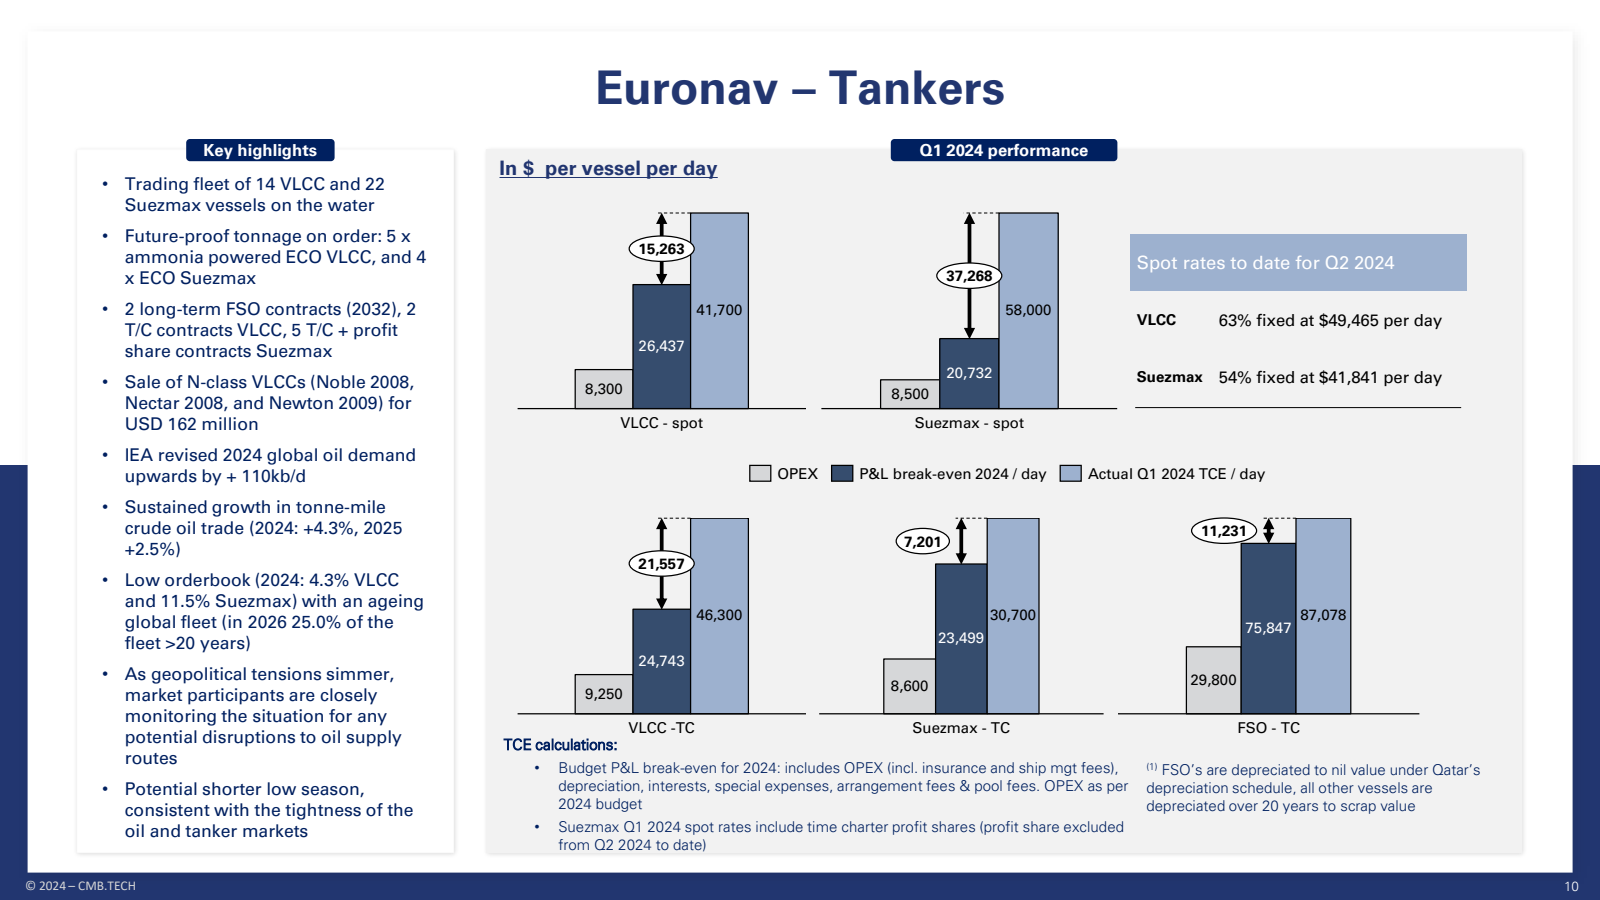 Euronav - Tankers 

